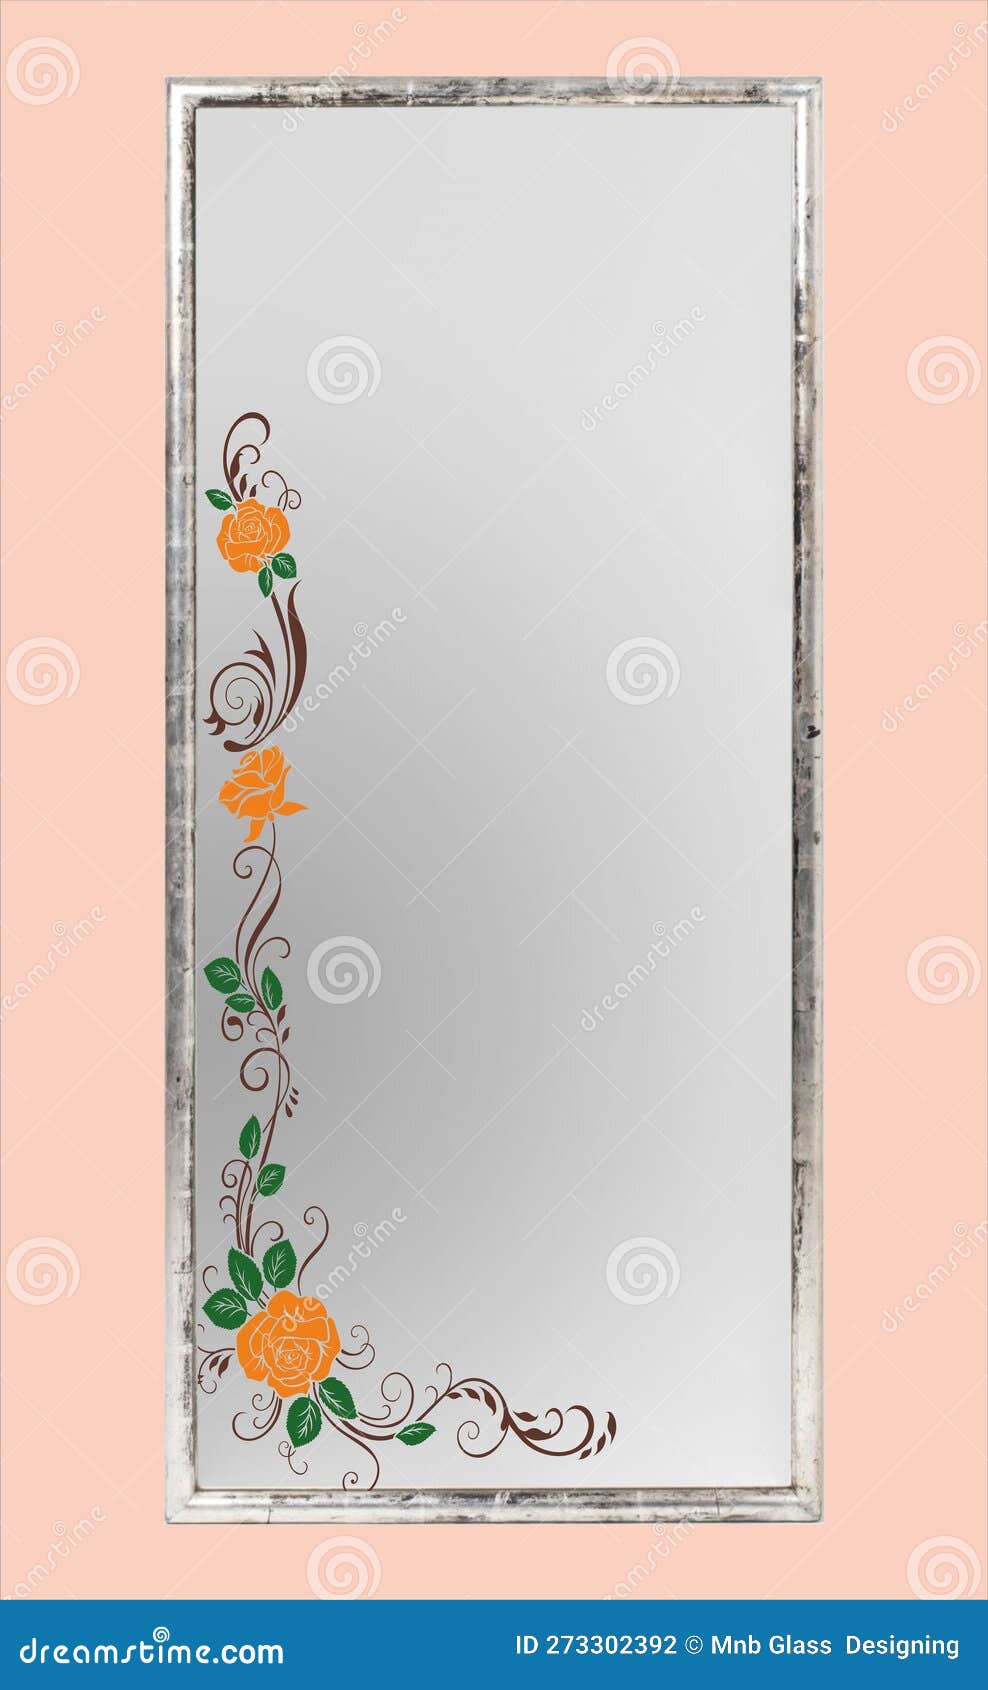 Mirrors Glass Border Design Vector CDR Stock Vector - Illustration ...